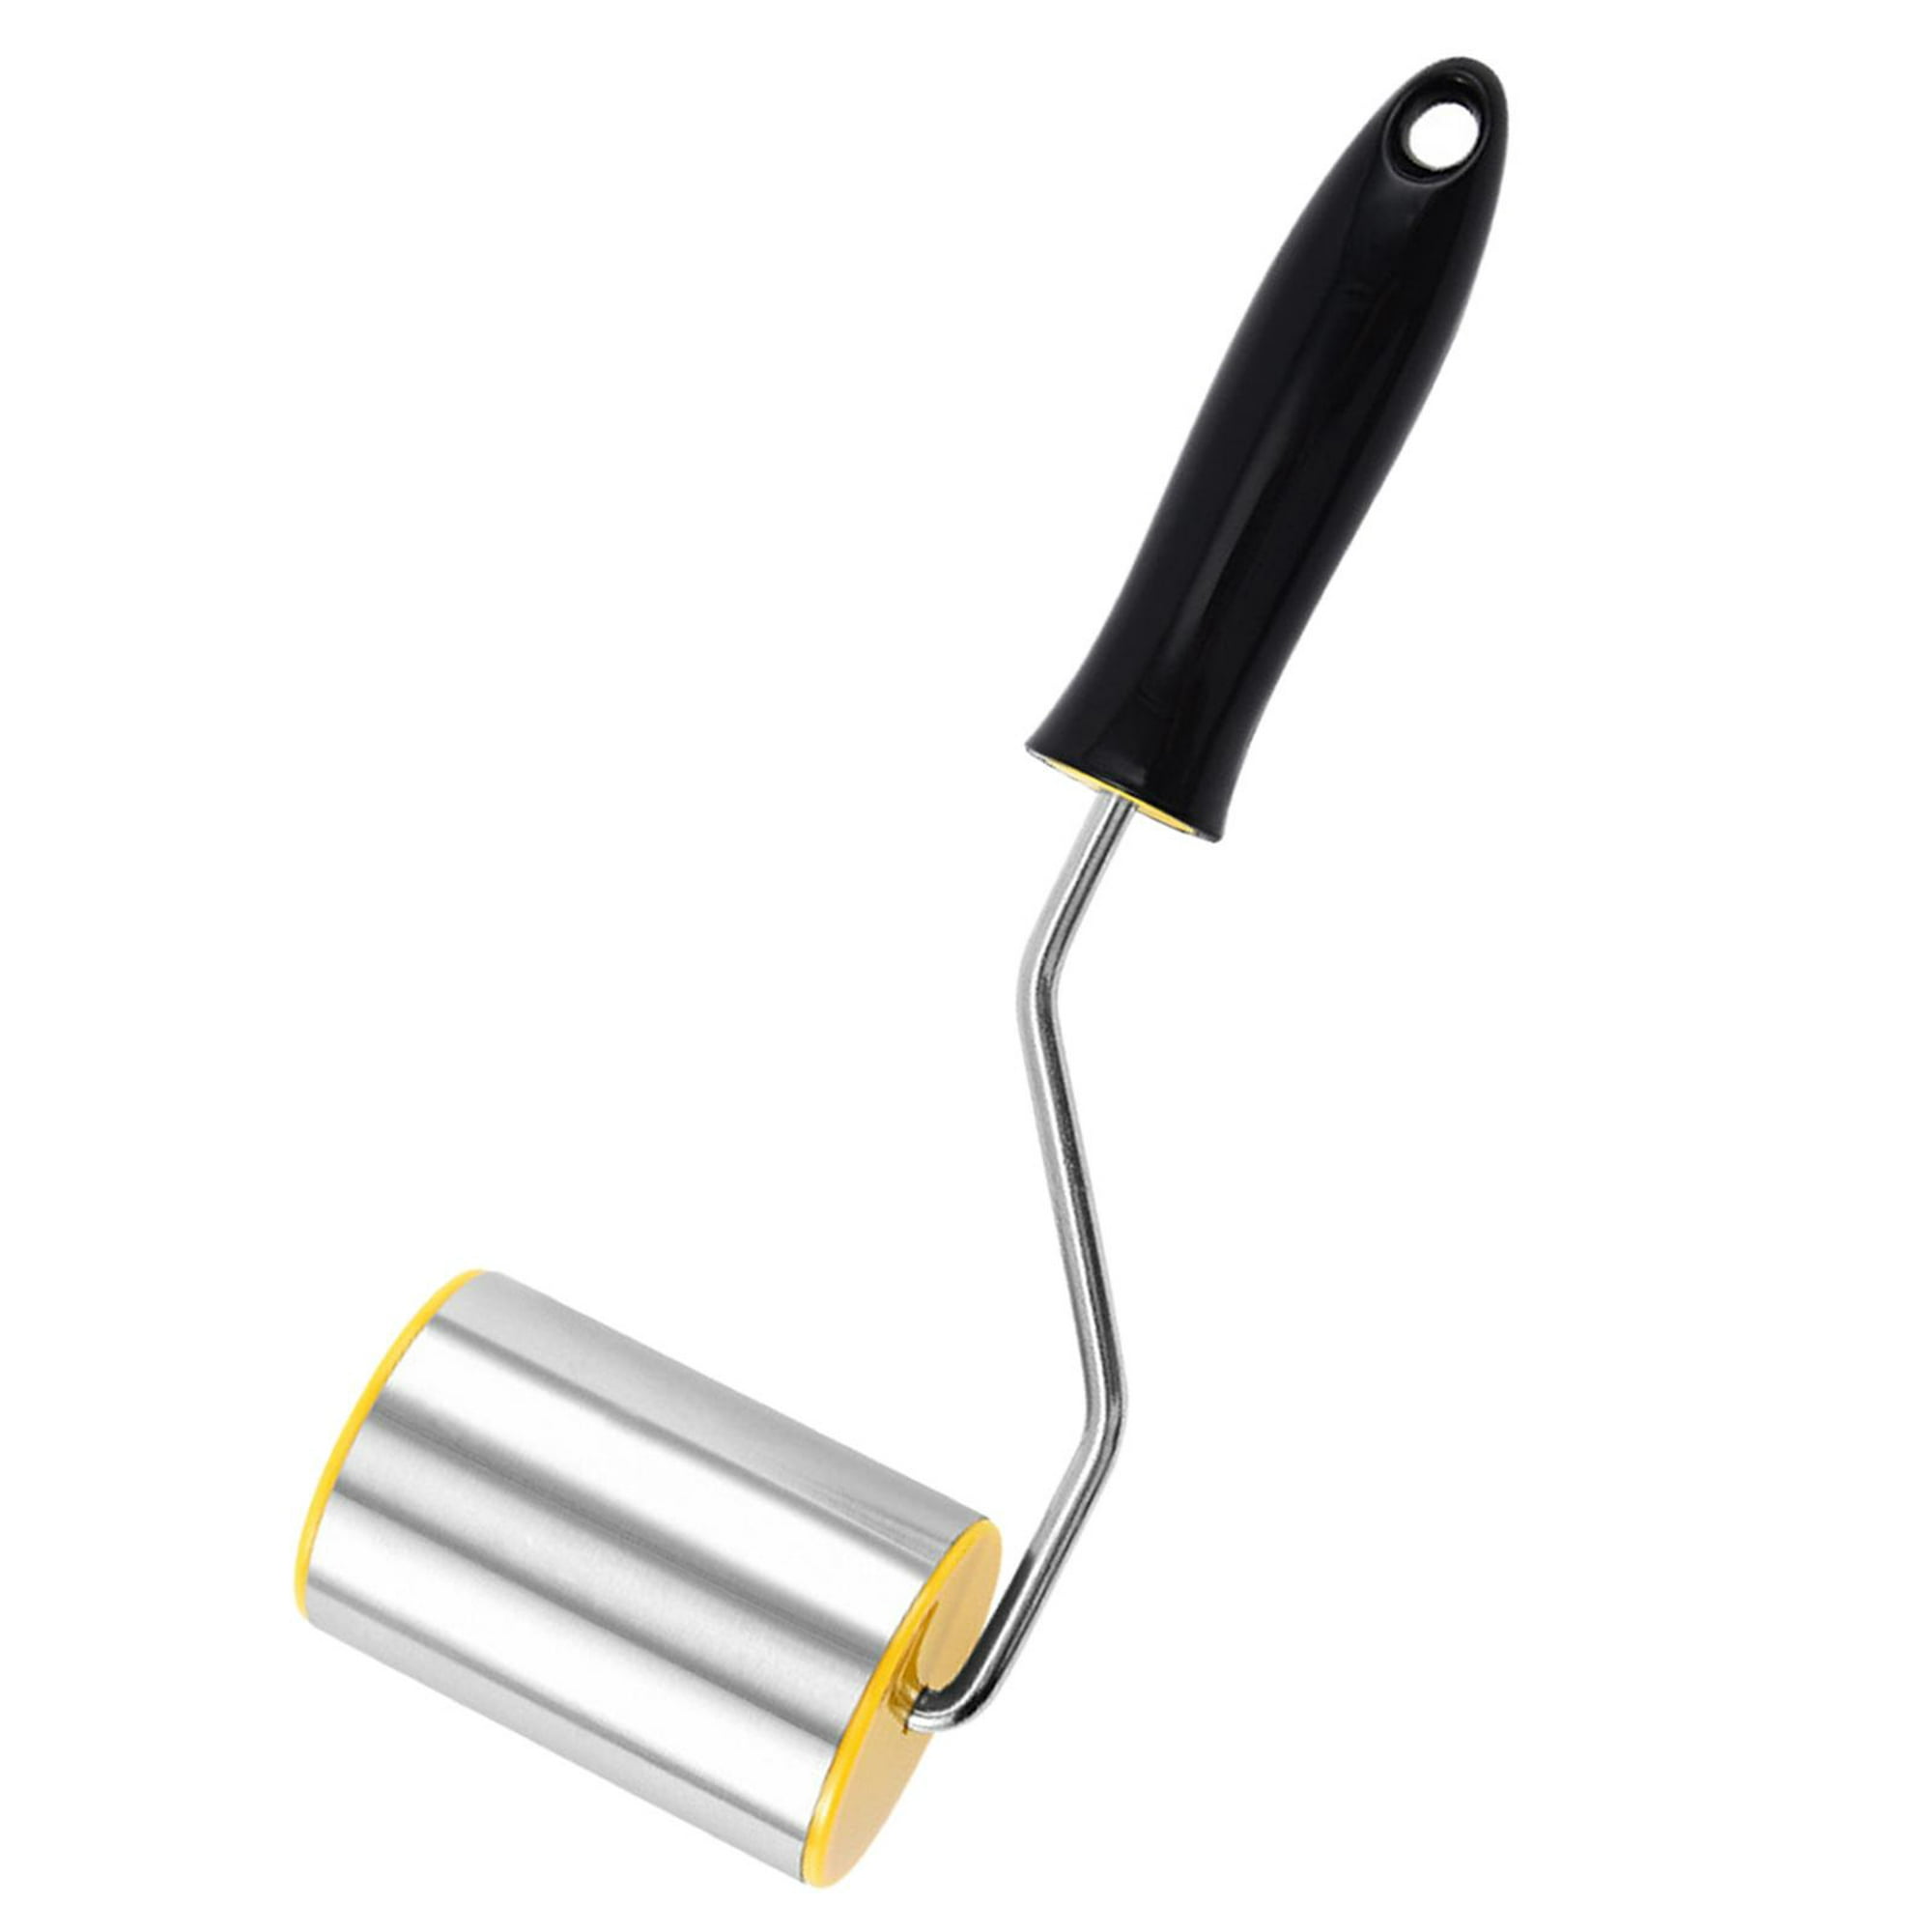 Rodillo de cocina, herramienta de cocina de panadería multifuncional,  rodillo de para hornear para repostería, , Pasta, Dumpling, , 11cmx19cm  perfecl rodillos de cocina